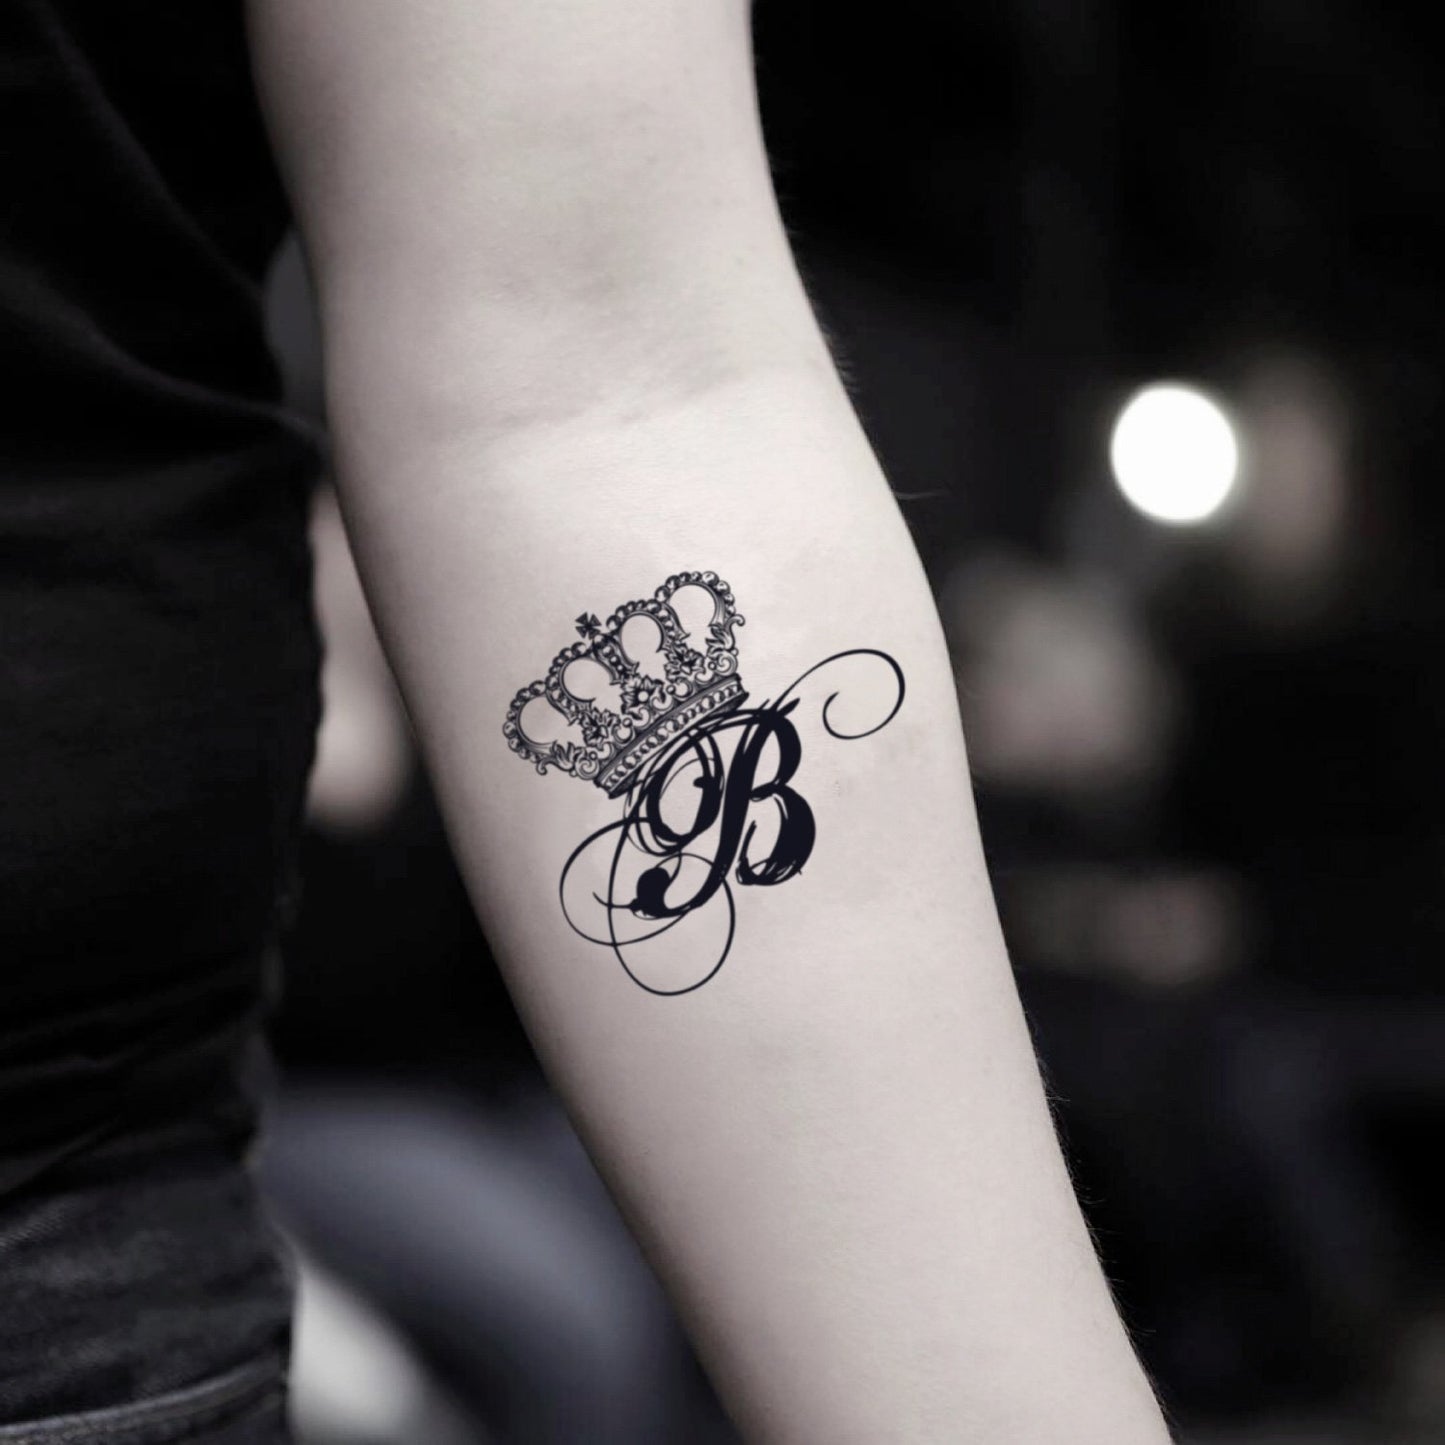 fake small queen b lettering temporary tattoo sticker design idea on inner arm